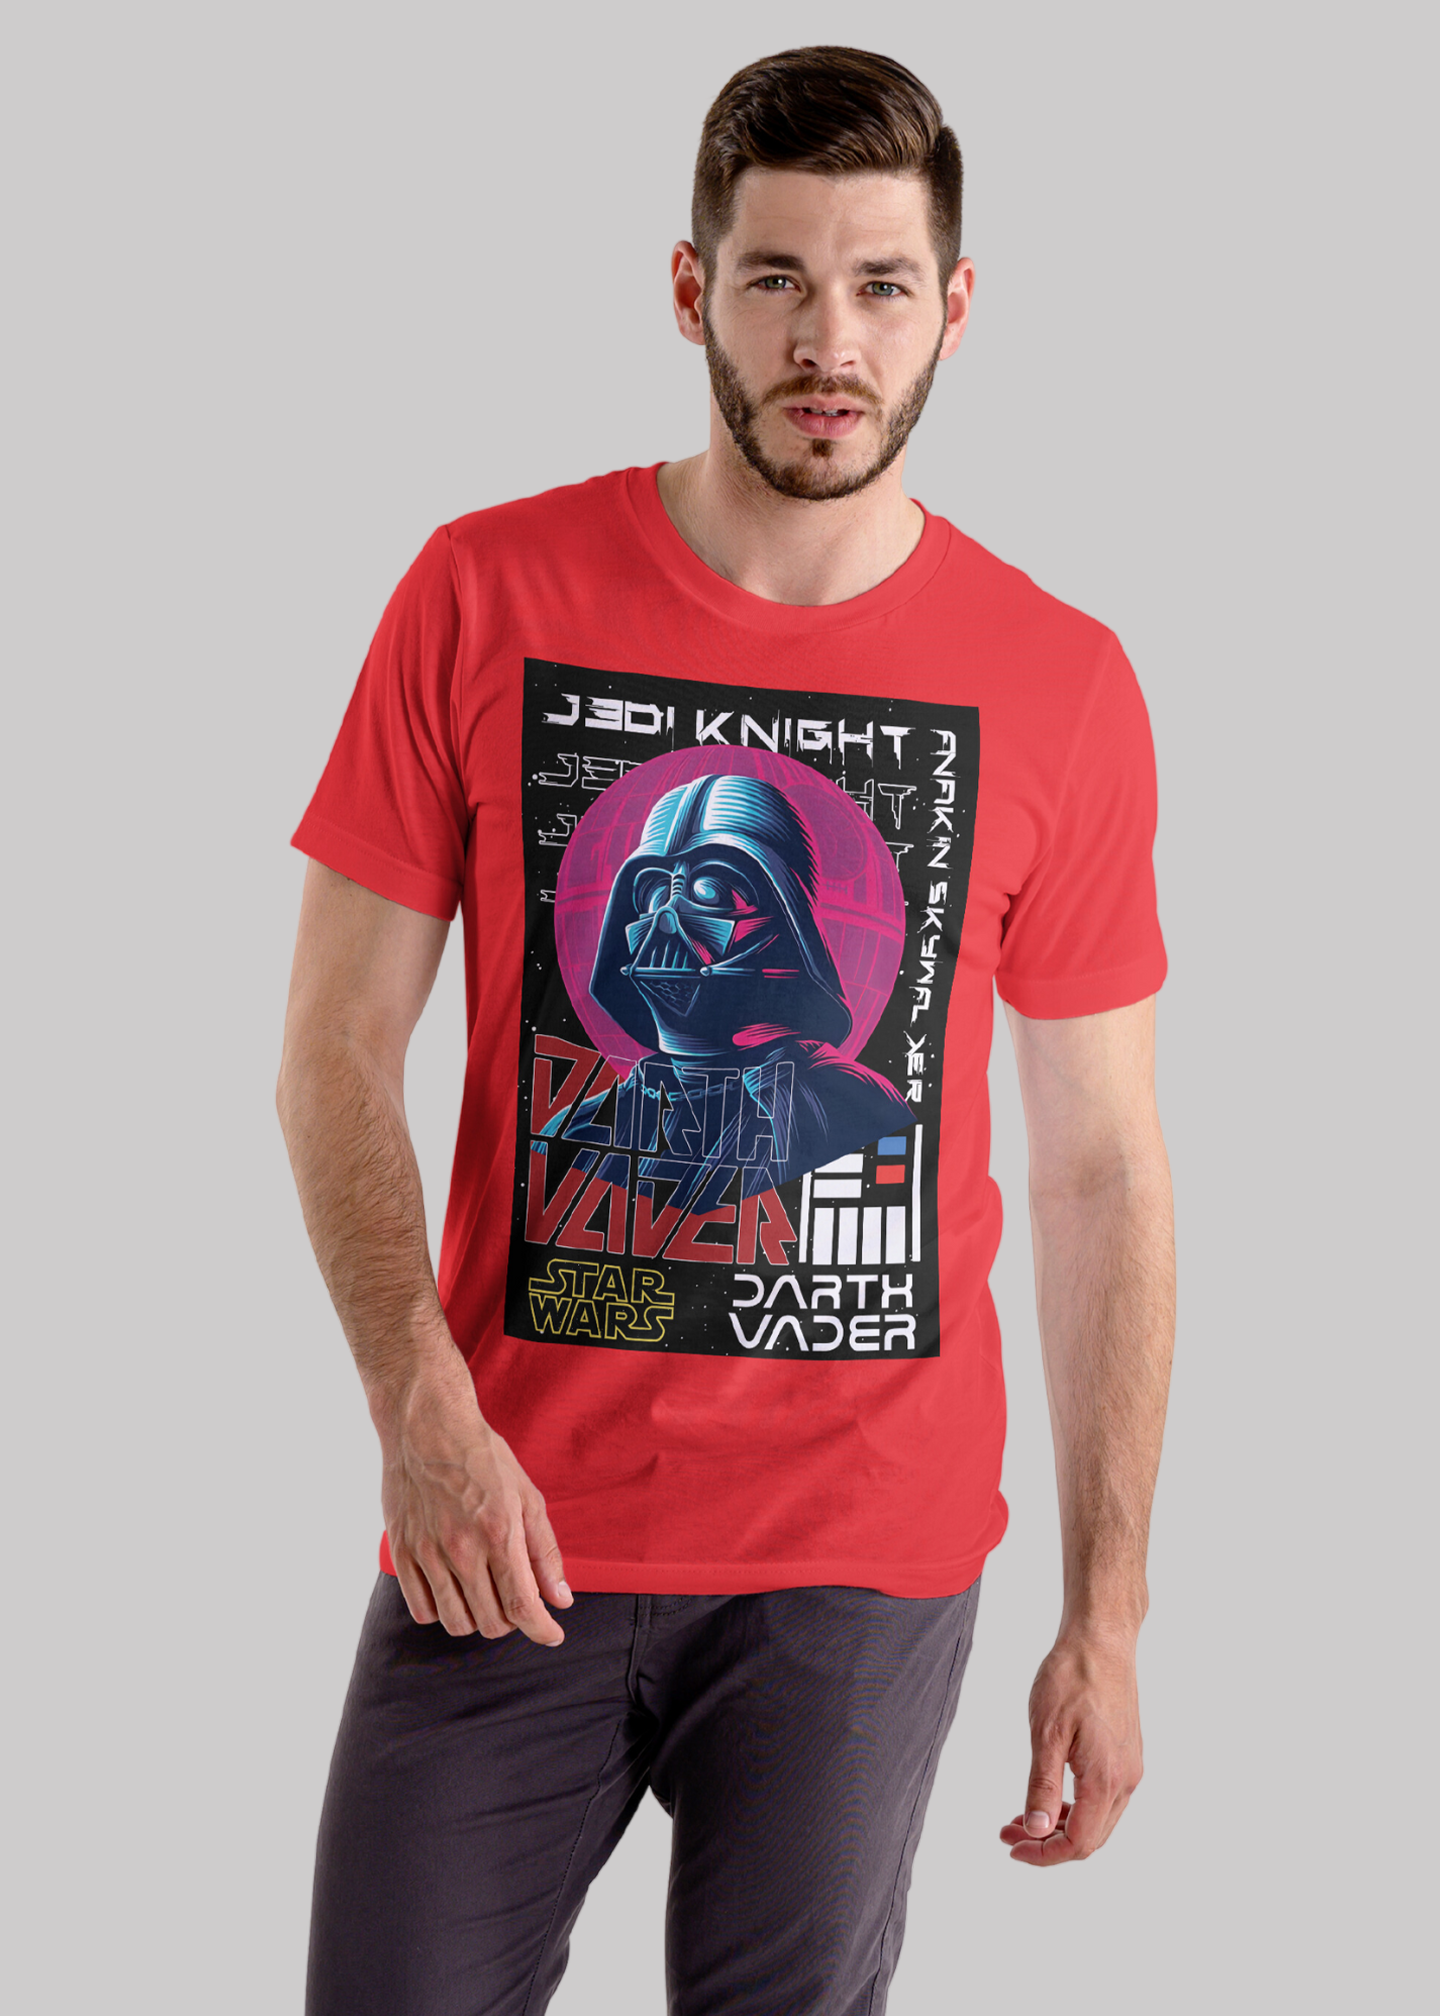 Star wars darth vader Printed Half Sleeve Premium Cotton T-shirt For Men